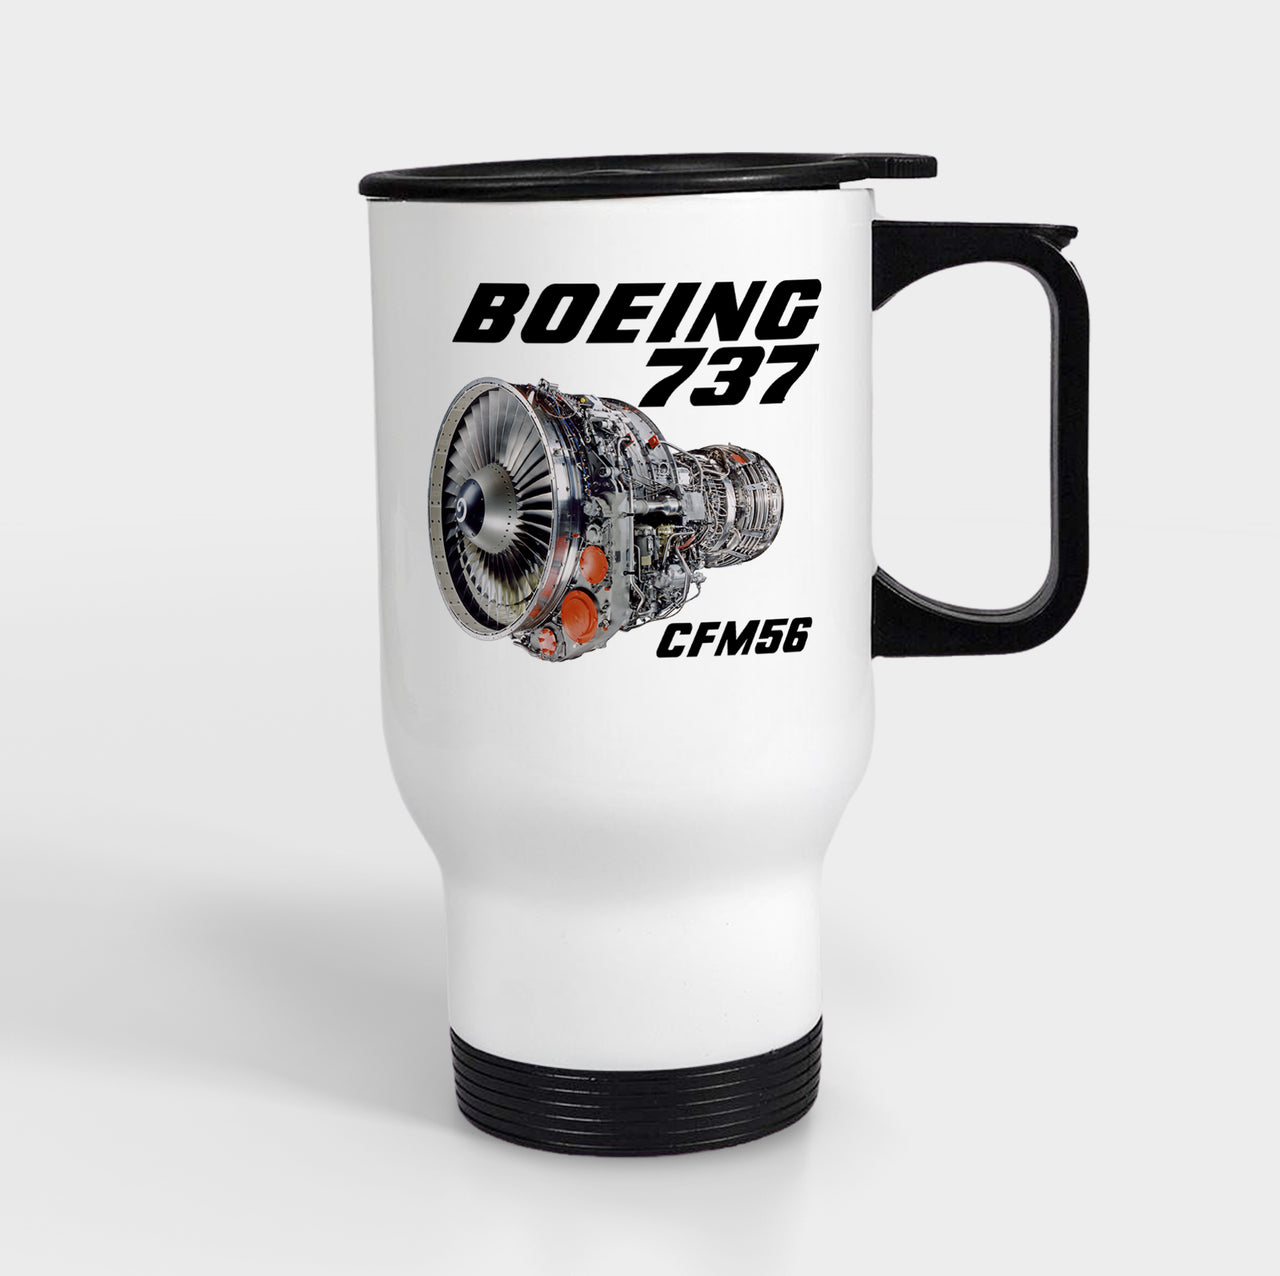 Boeing 737 Engine & CFM56 Designed Travel Mugs (With Holder)